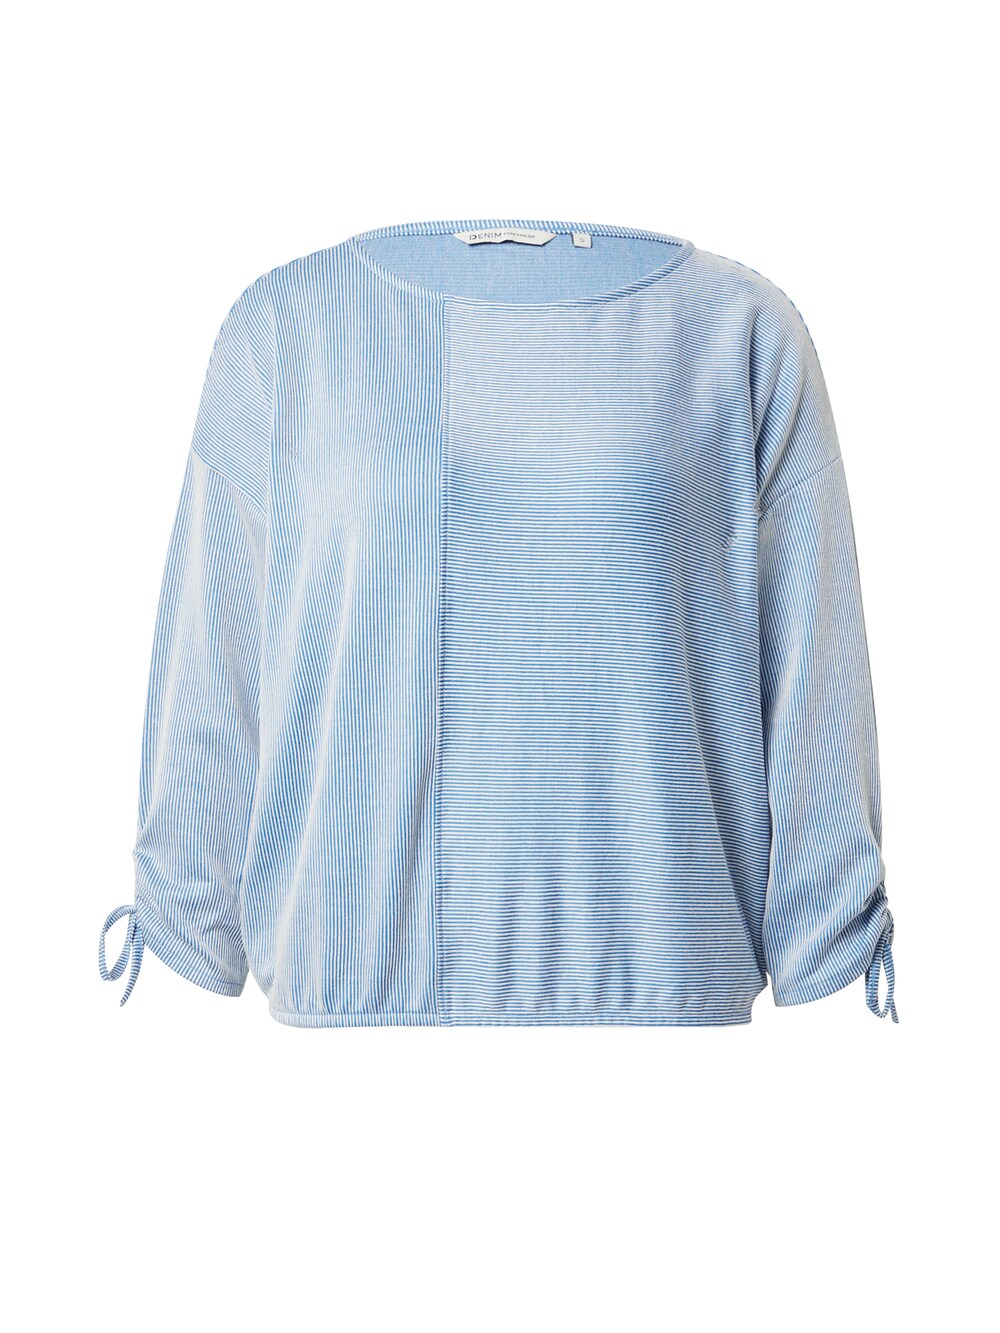 Рубашка Tom Tailor, синий футболка tom tailor 1016496 10668 женская цвет тёмно синий размер s